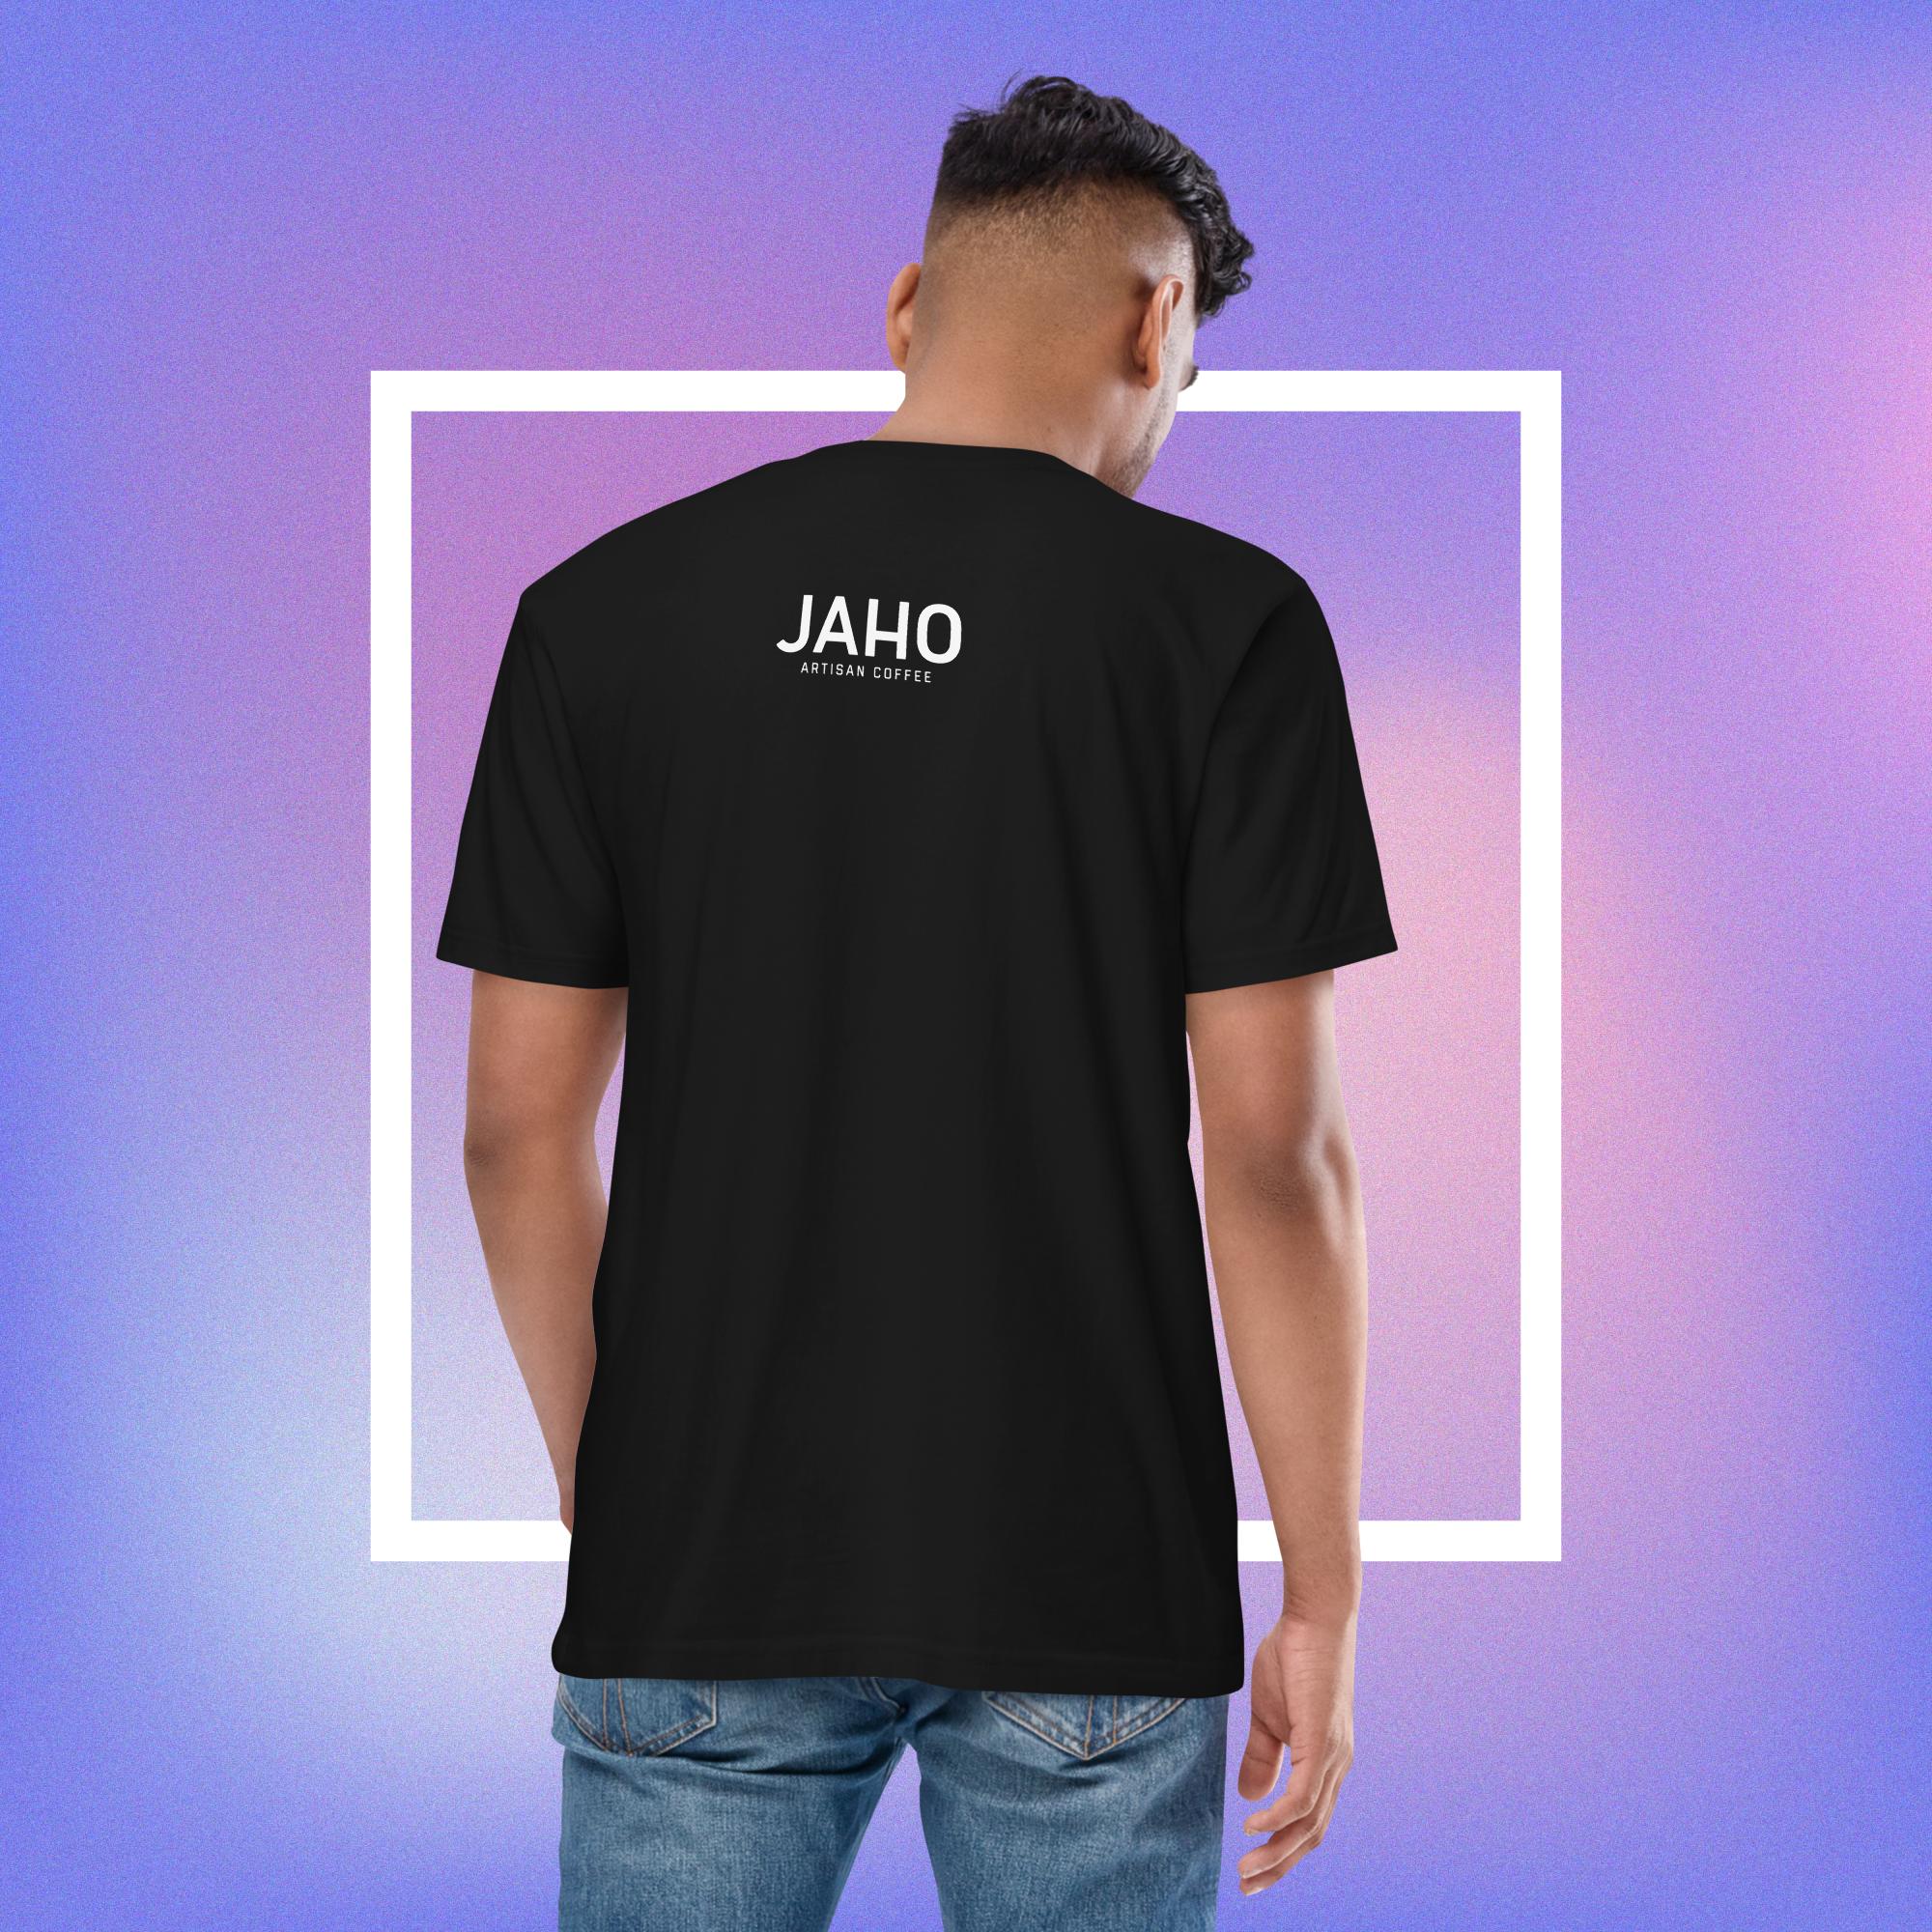 Jaho GOAT Shirt - Jaho Coffee Roaster